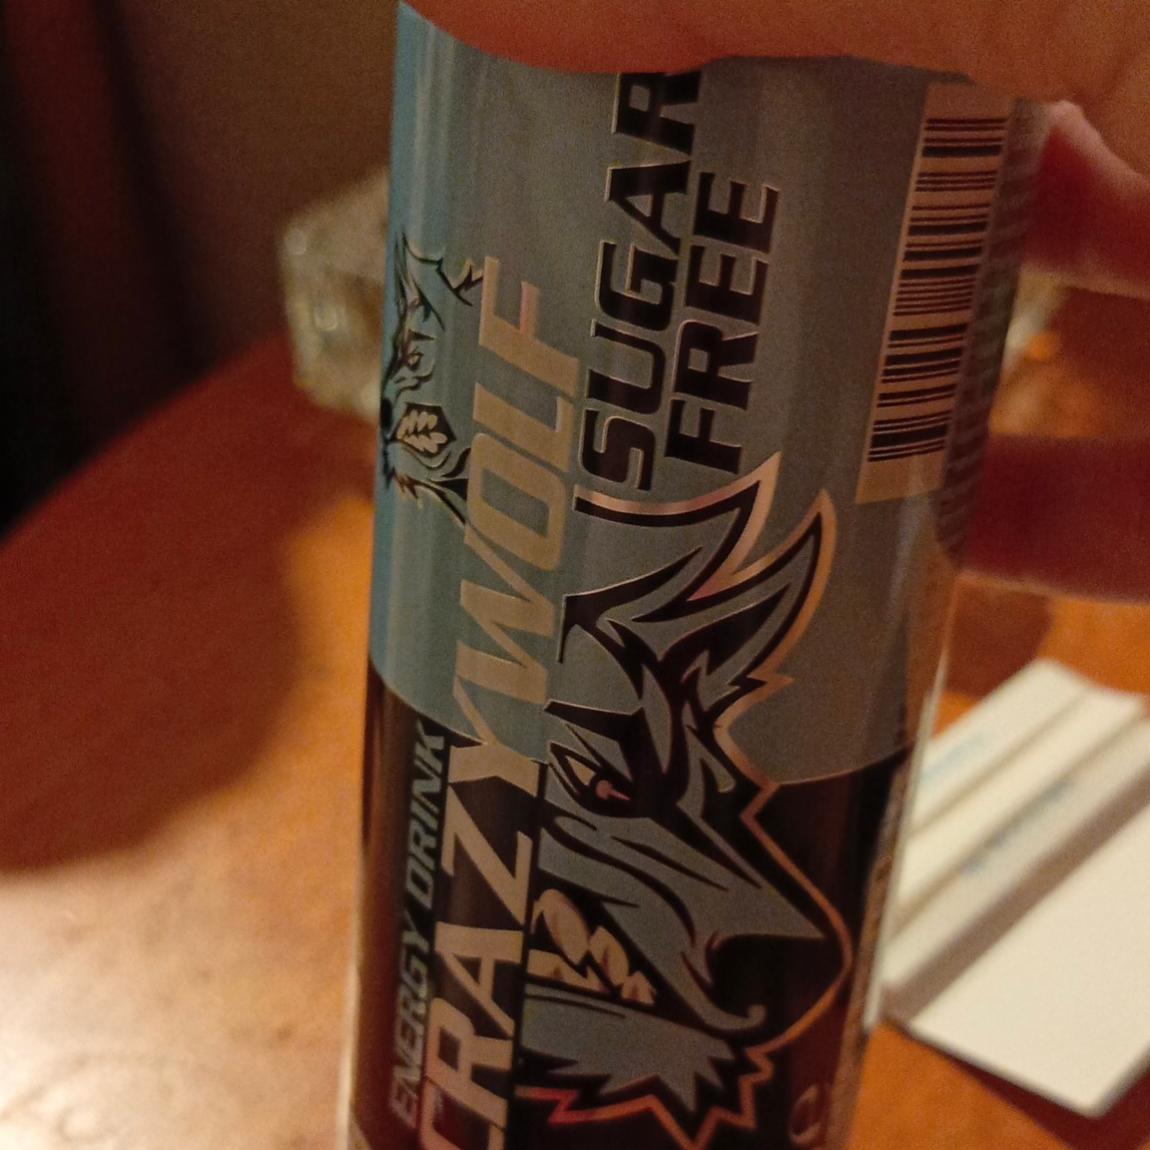 Képek - Crazy Wolf Sugar free energy drink